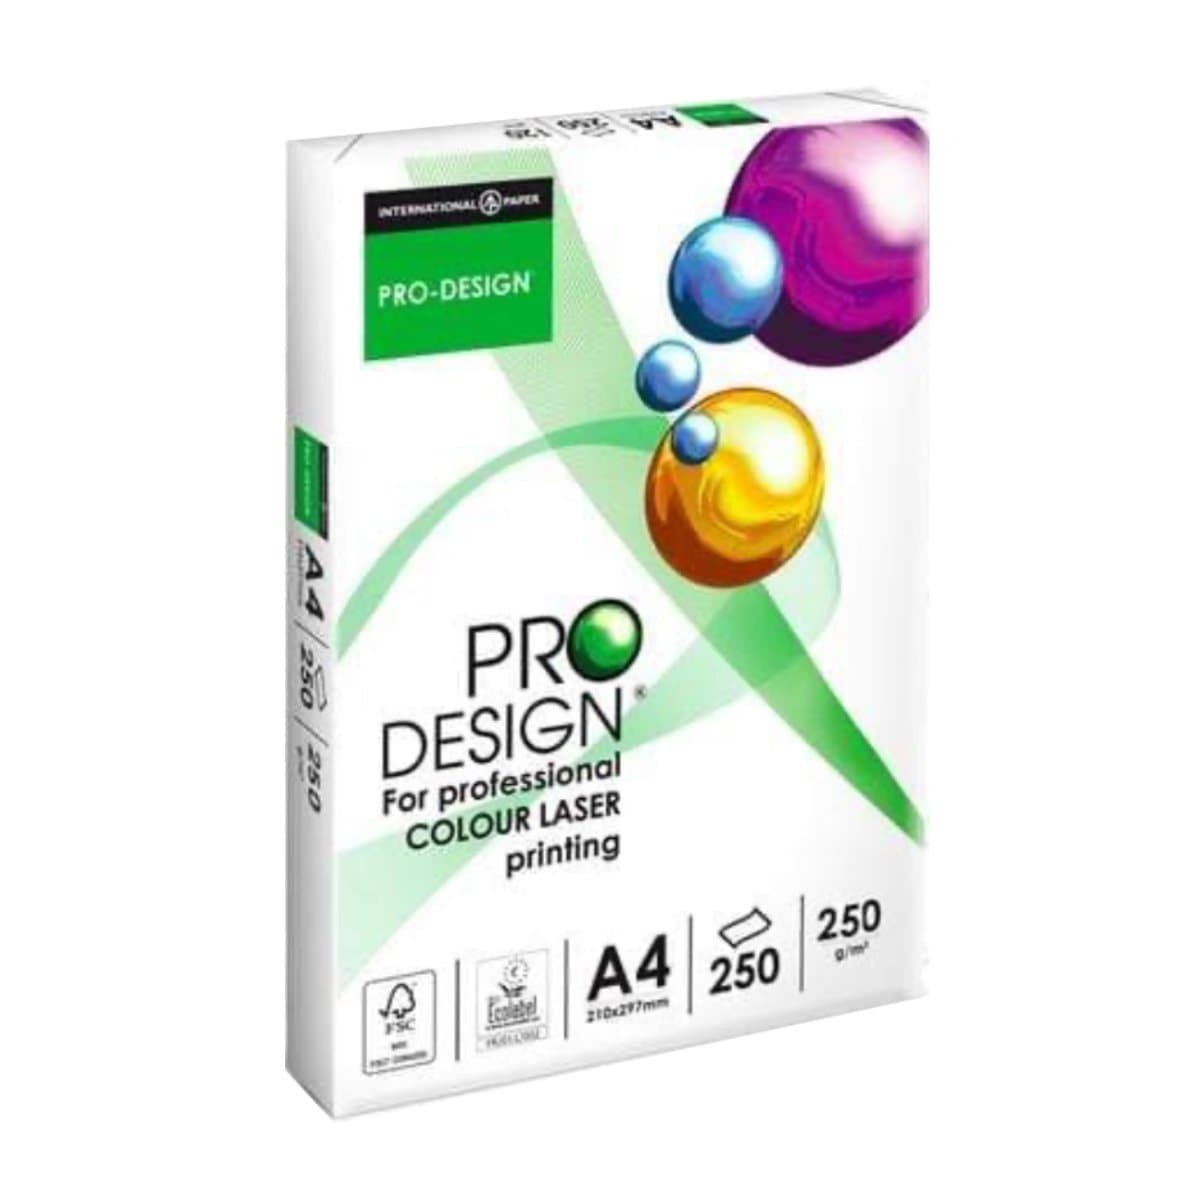 PRO-DESIGN Premium Paper A4, 250gsm, 250sheets/pack, White